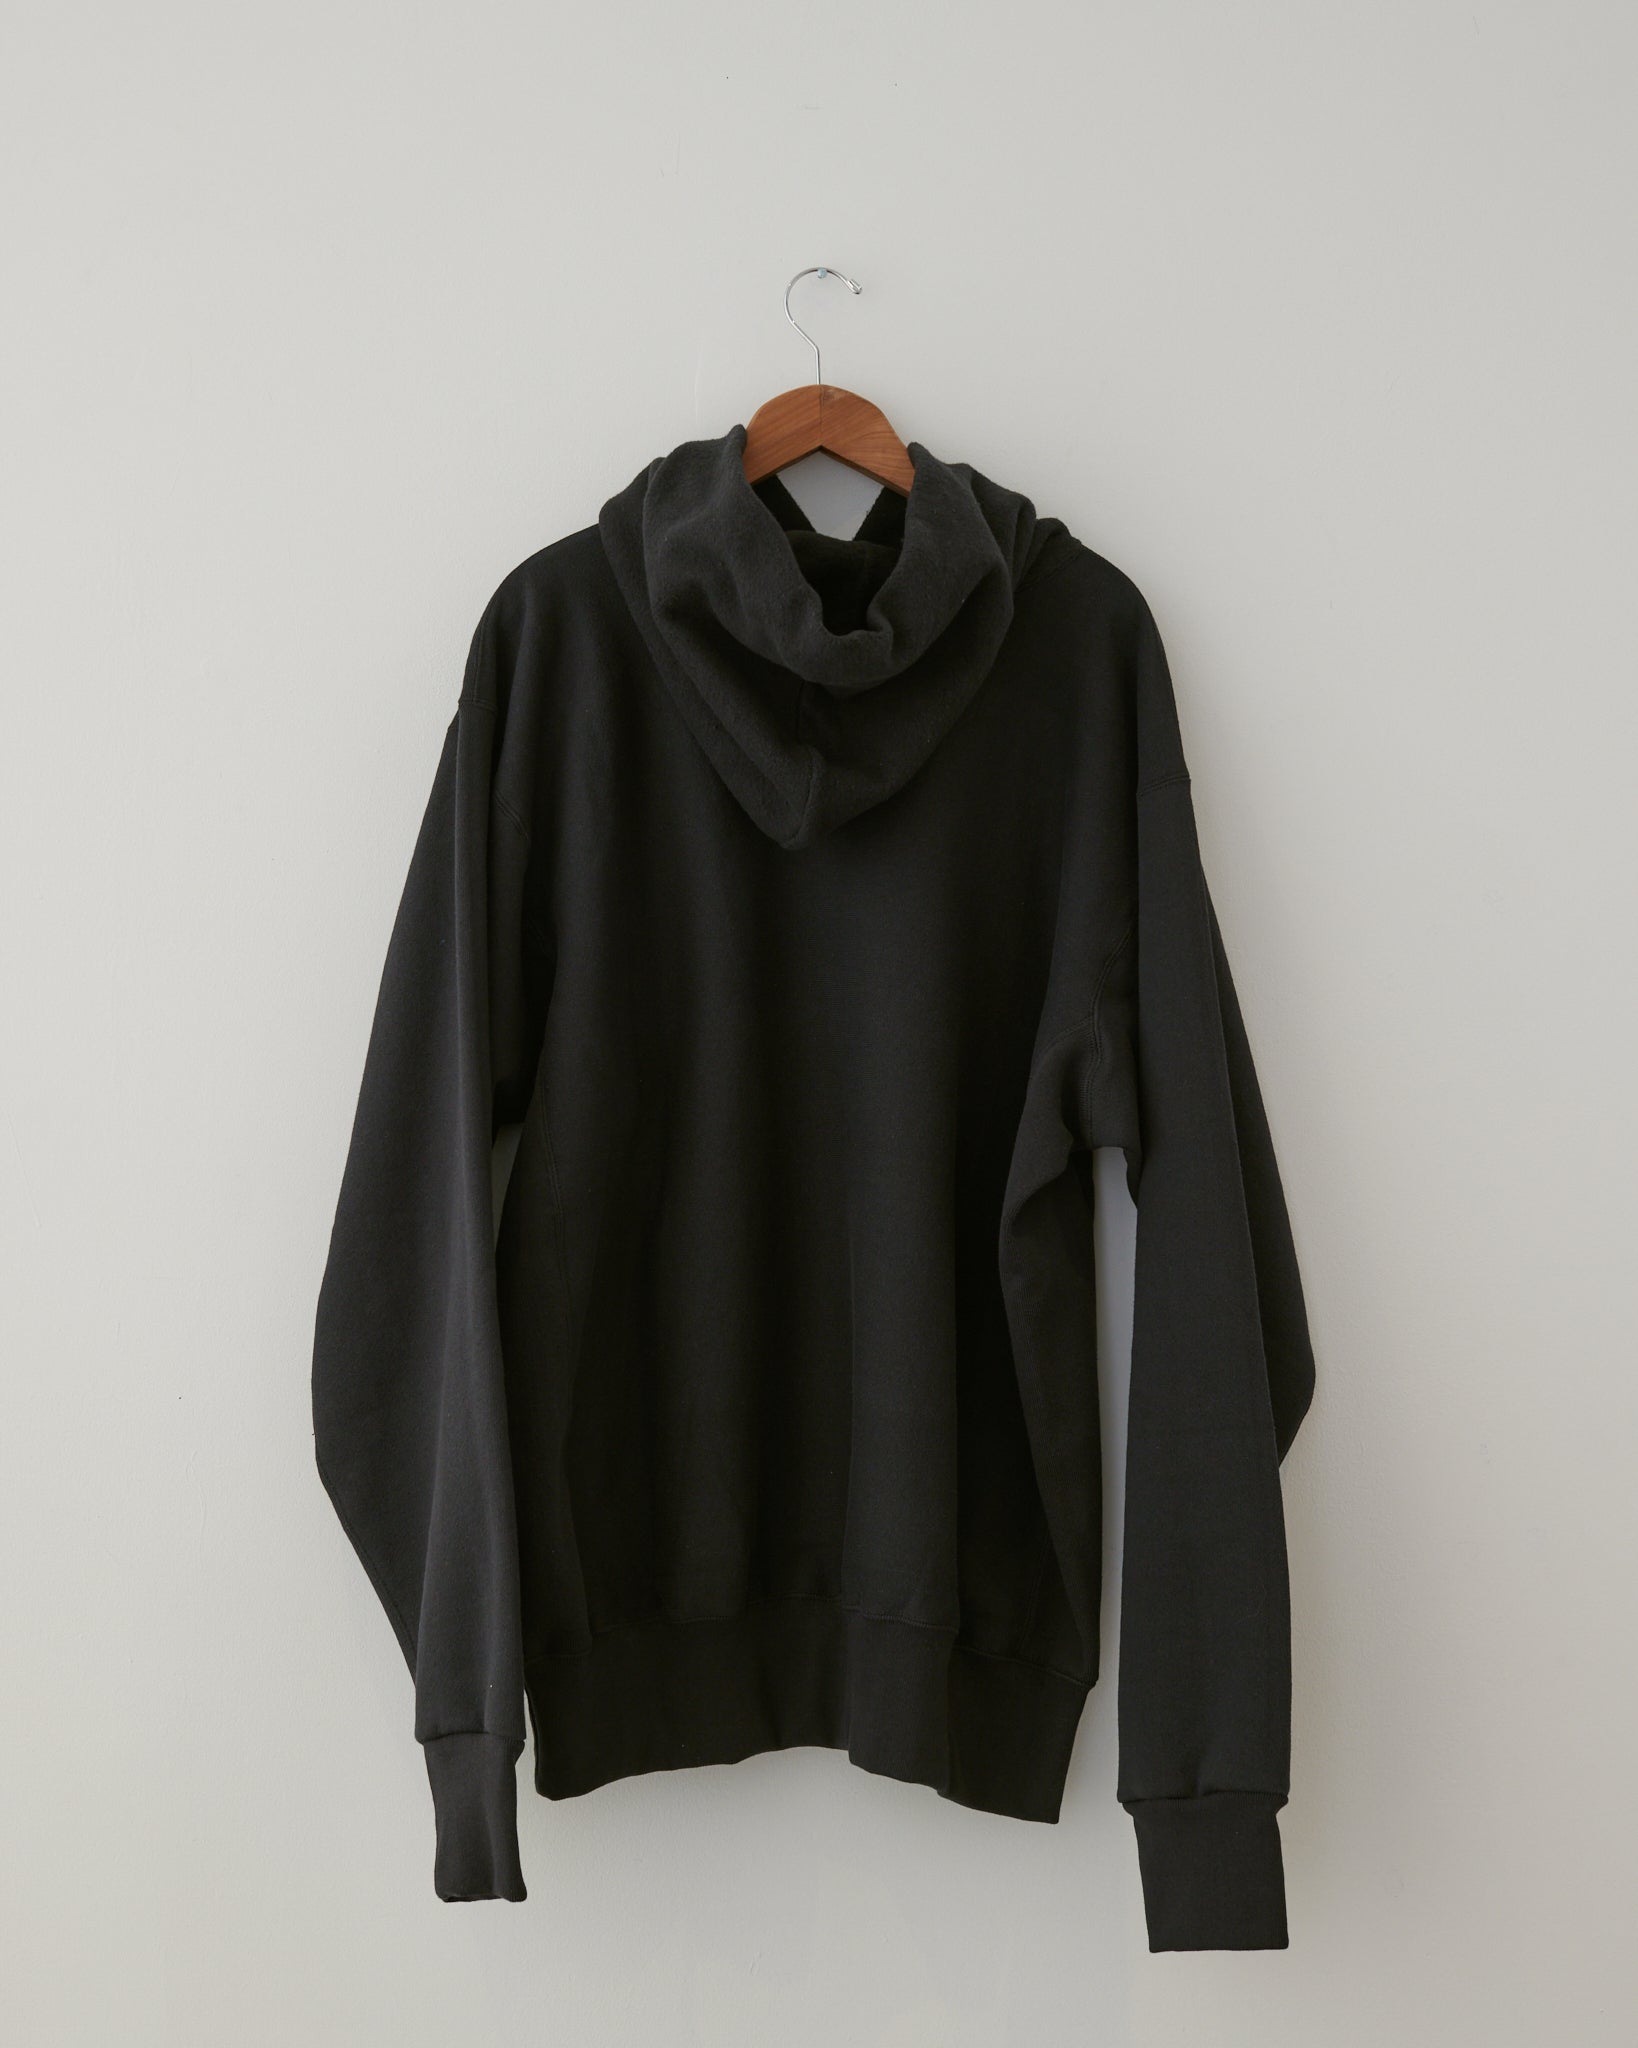 Csillag By Kellsport Inside-Out Hooded Sweatshirt